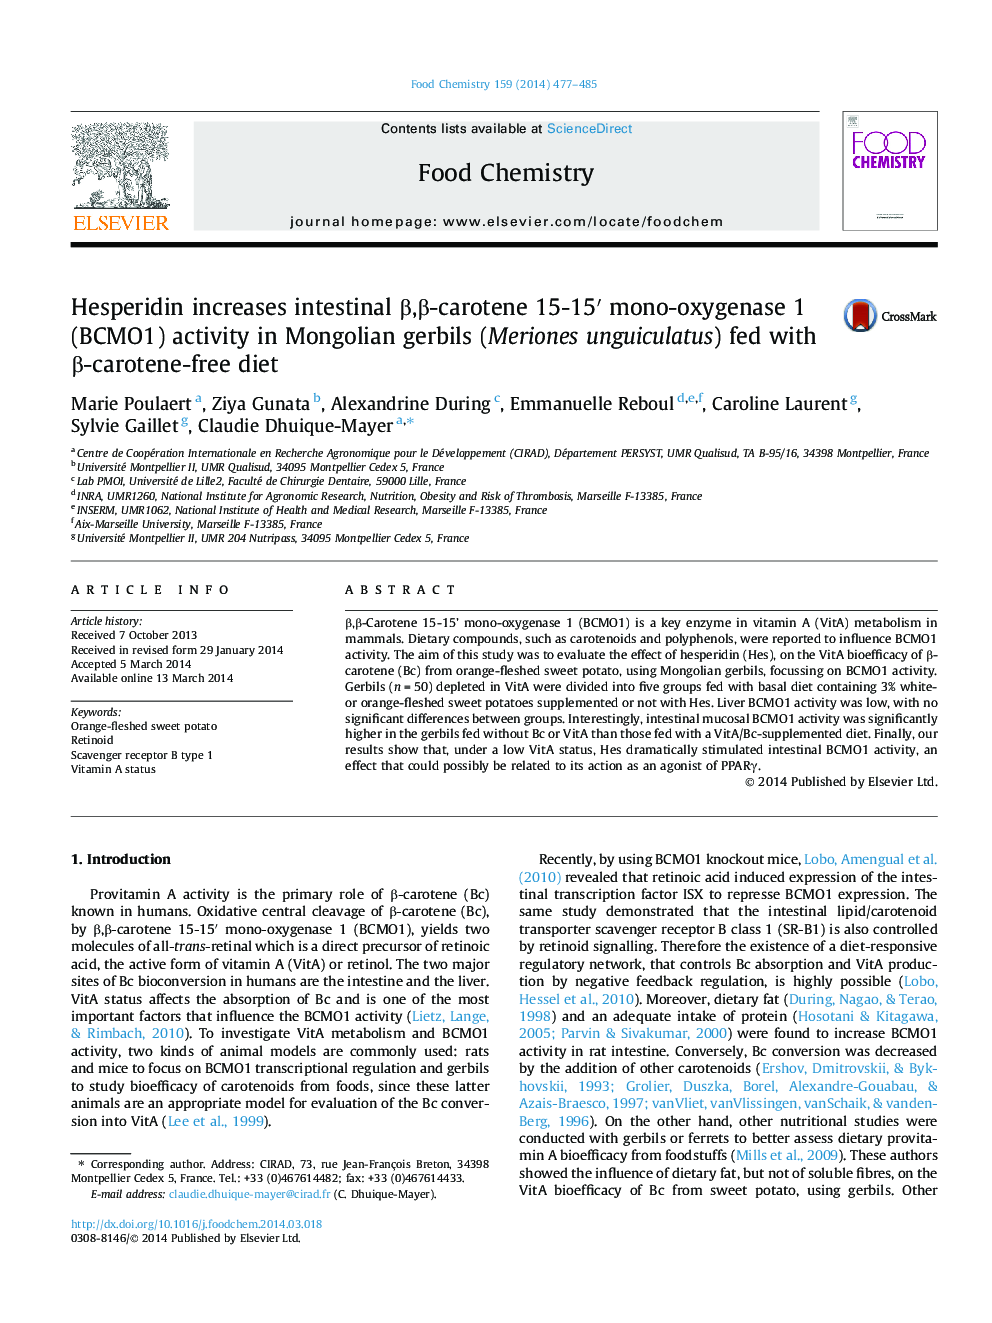 Hesperidin increases intestinal Î²,Î²-carotene 15-15â² mono-oxygenase 1 (BCMO1) activity in Mongolian gerbils (Meriones unguiculatus) fed with Î²-carotene-free diet